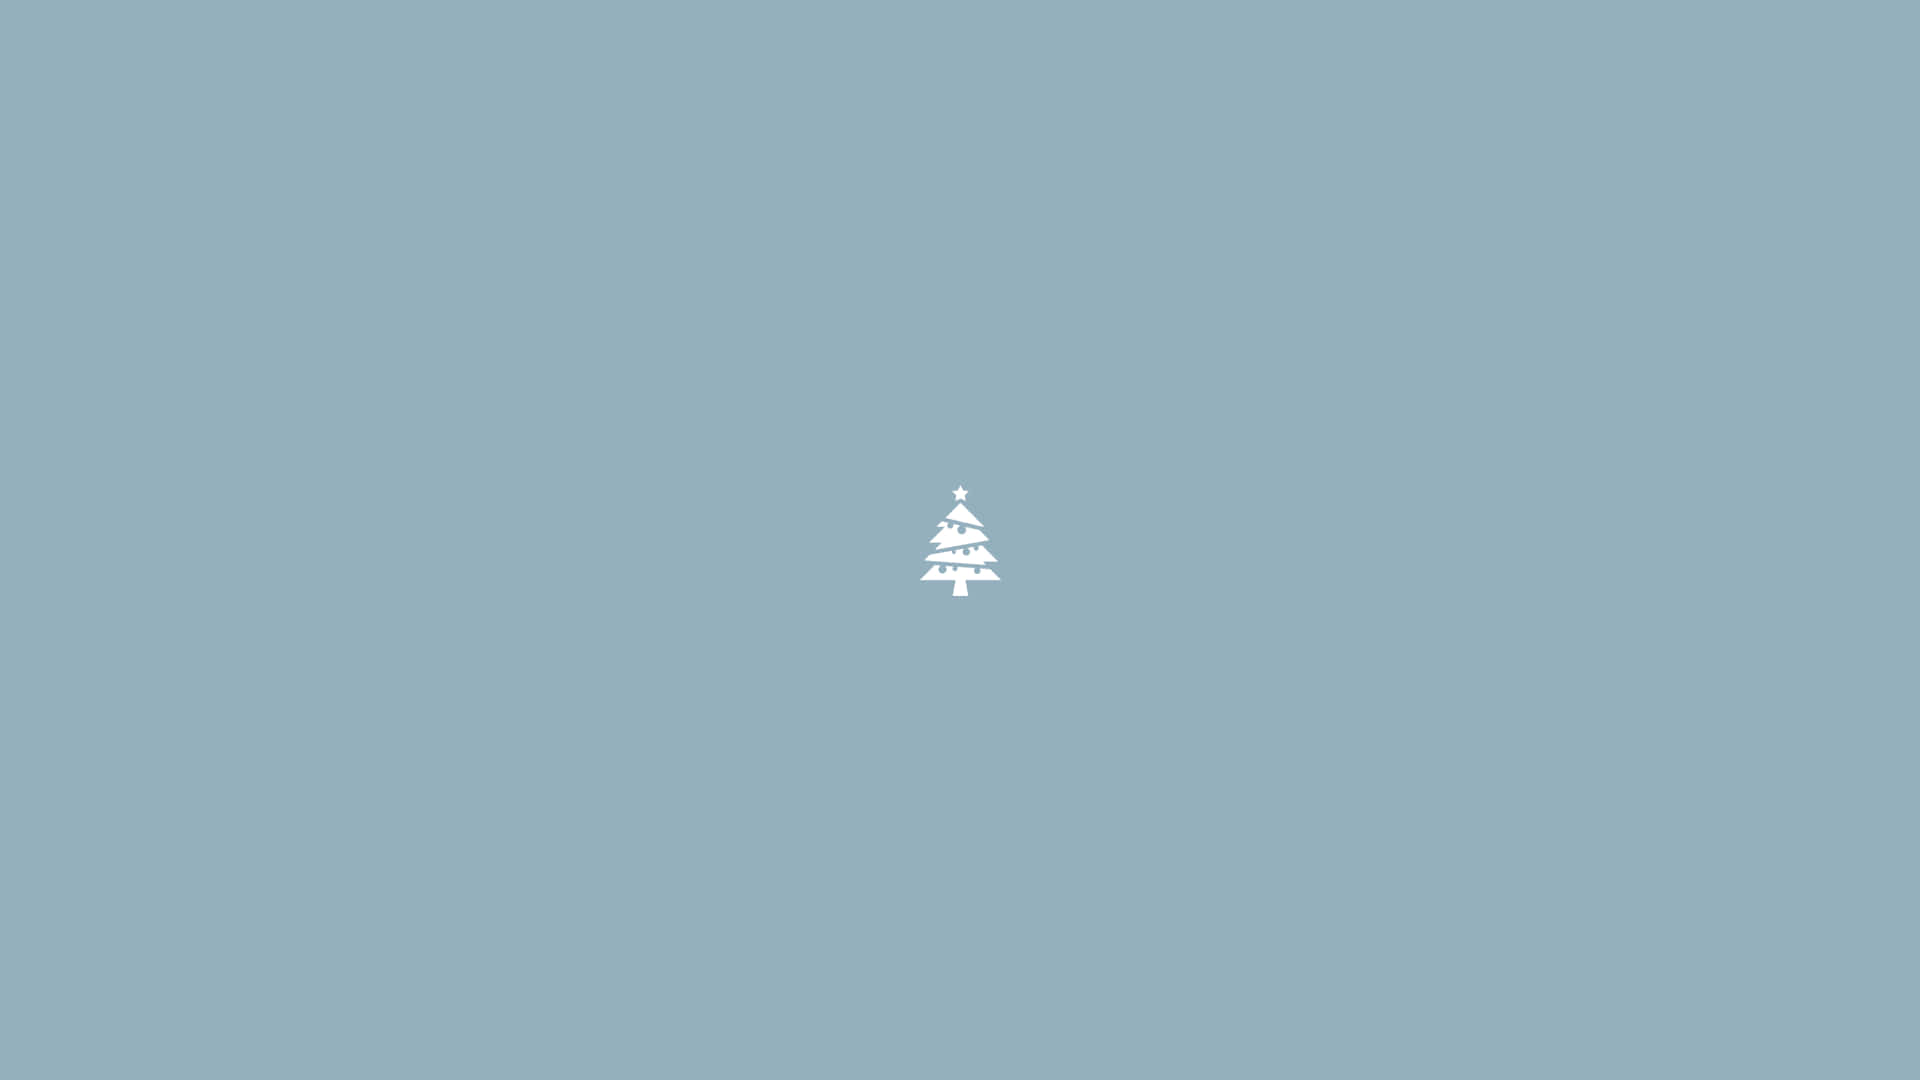 Wallpaperpapel De Parede De Natal Para Ipad Com Árvore Branca Pequena E Simples. Papel de Parede